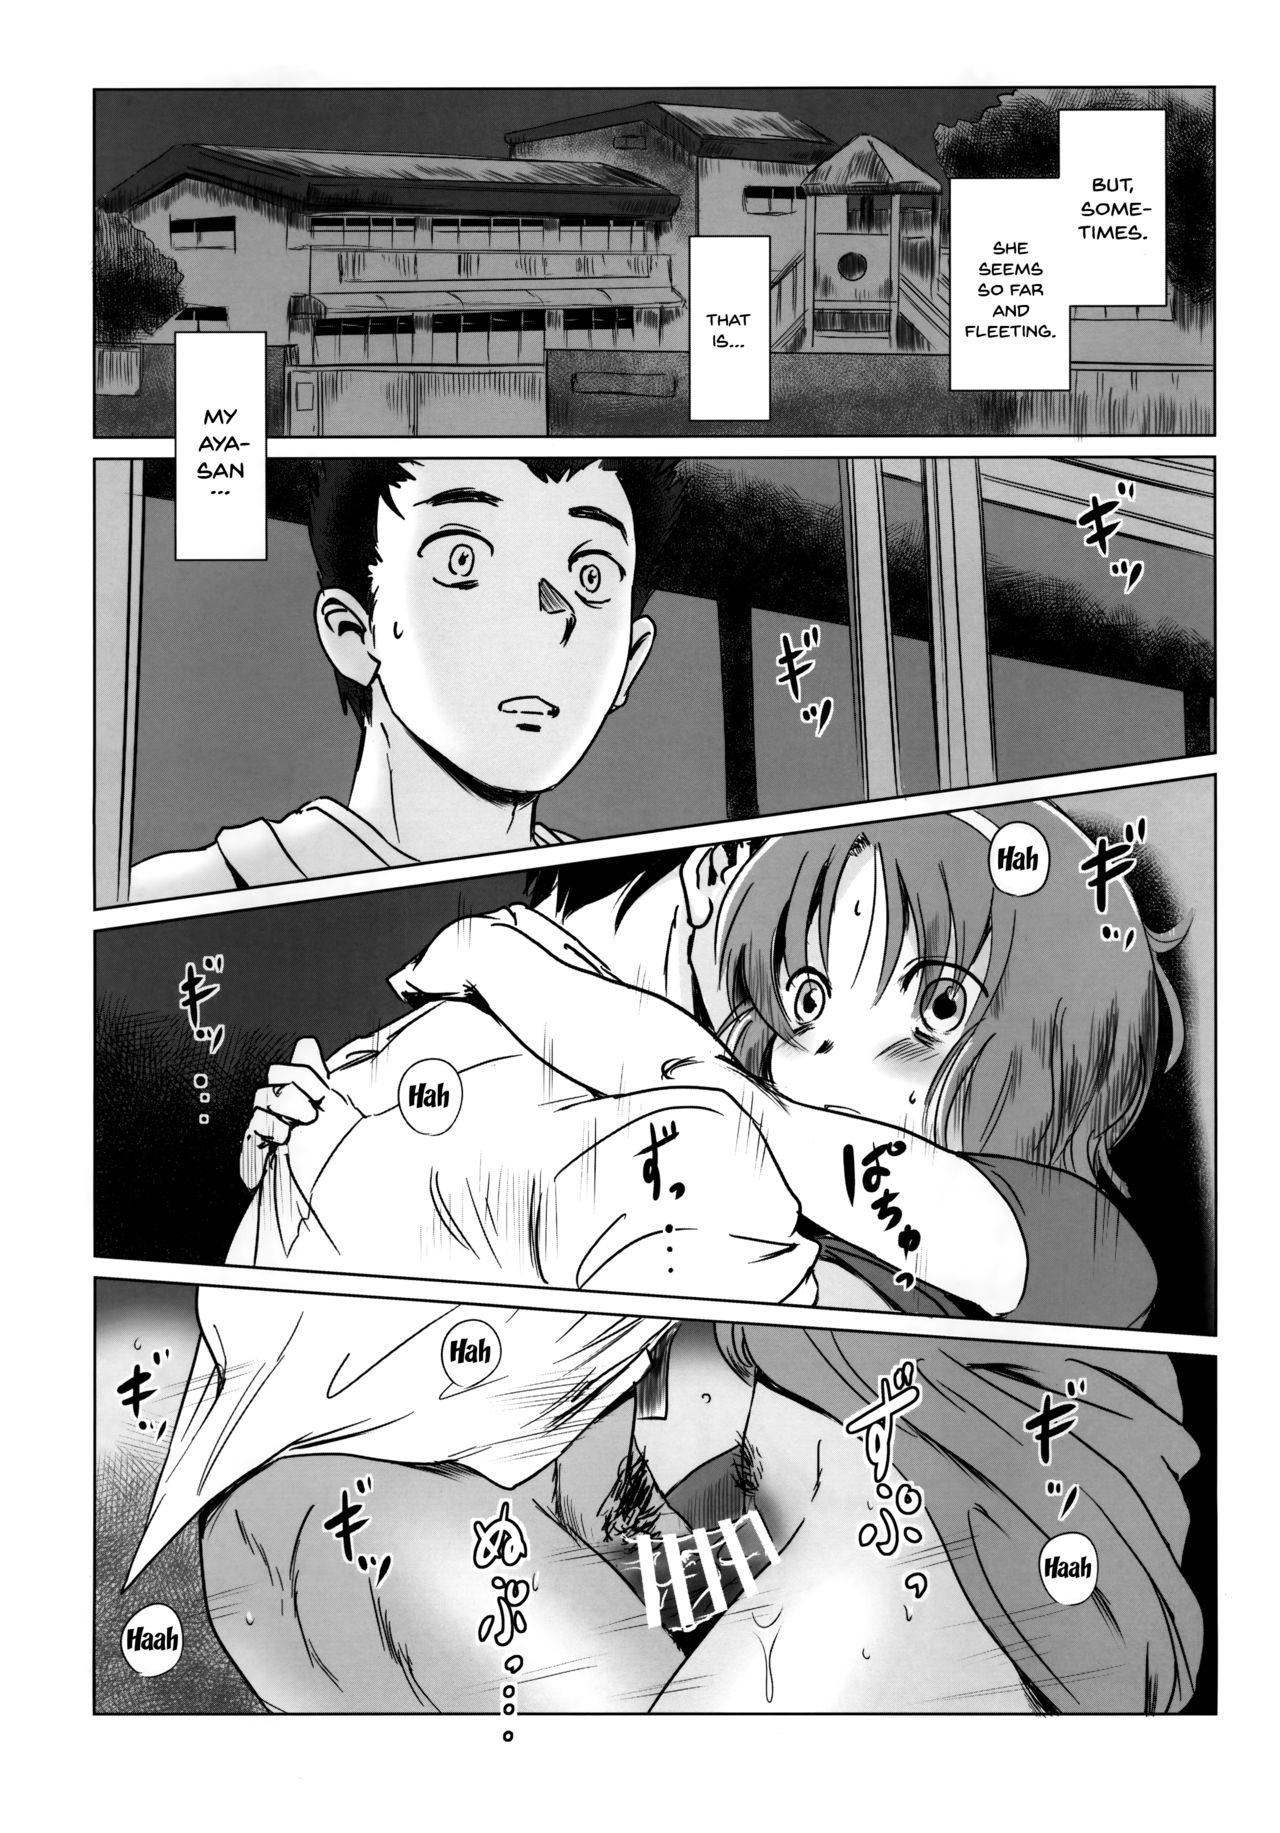 Chicks Story of the 'N' Situation - Situation#1 Kyouhaku - Original Nice - Page 3